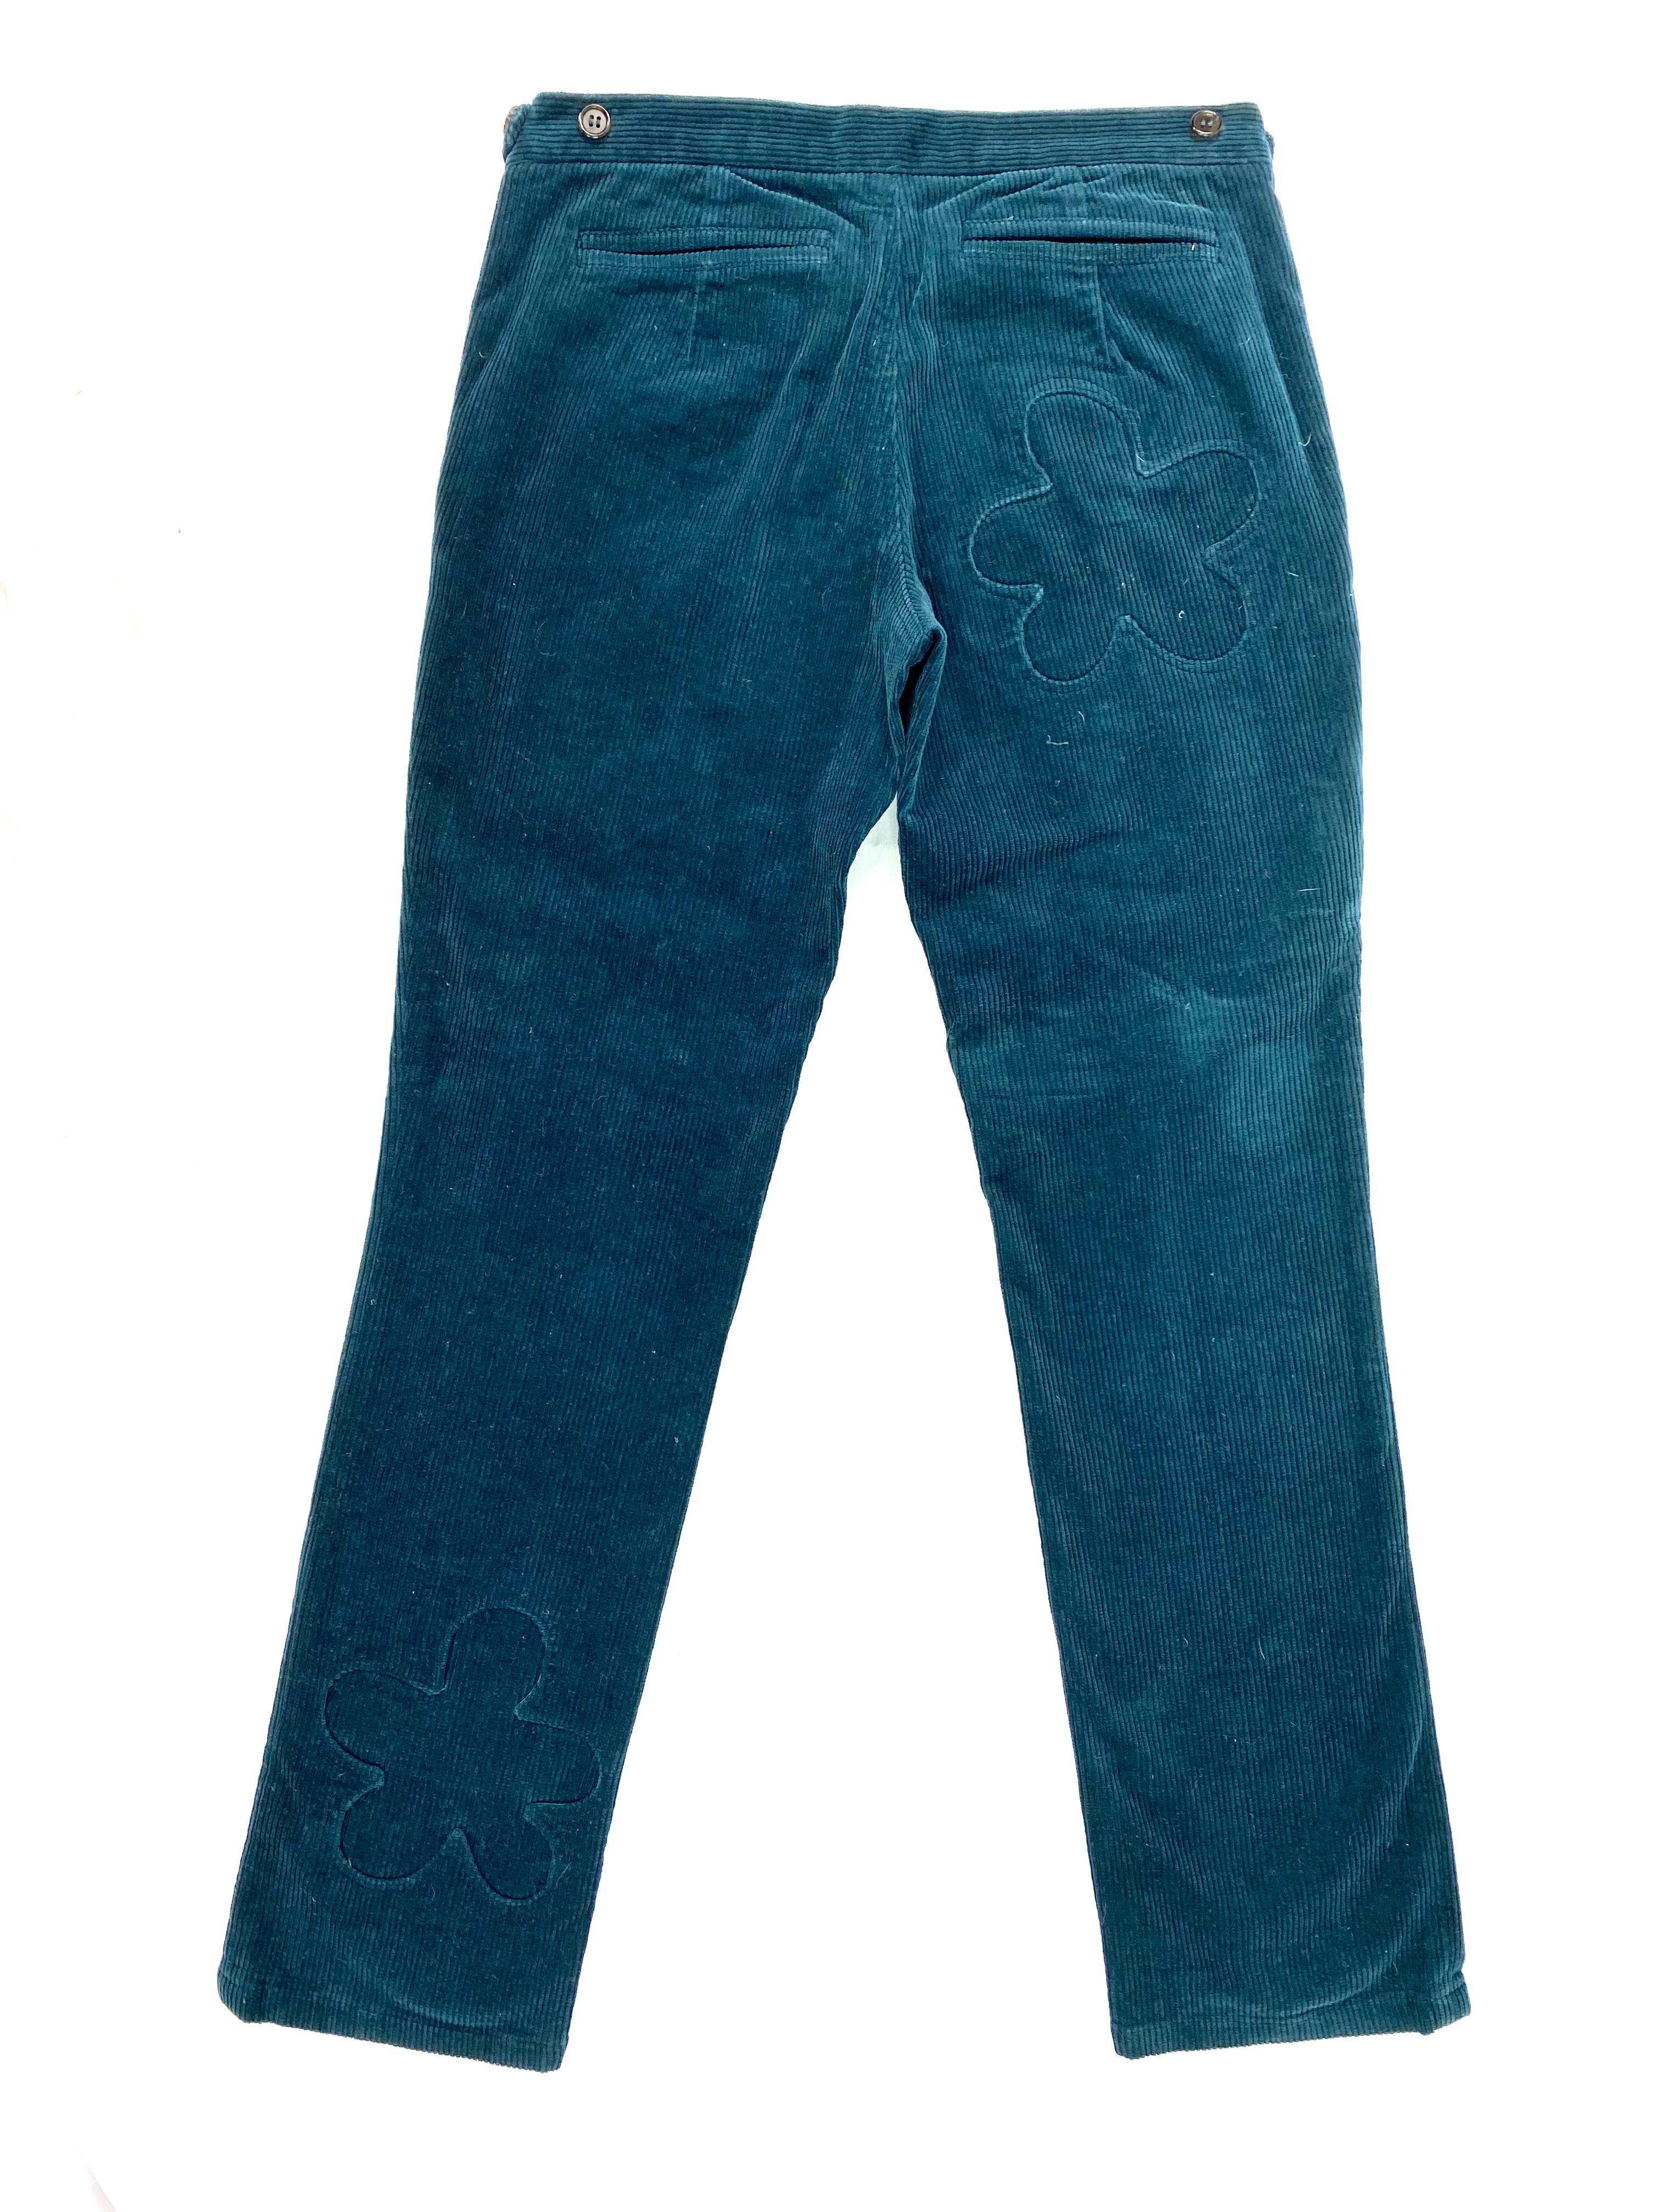 Pantalon skinny Jun Takahashi turquoise en velours côtelé taille S en vente 3